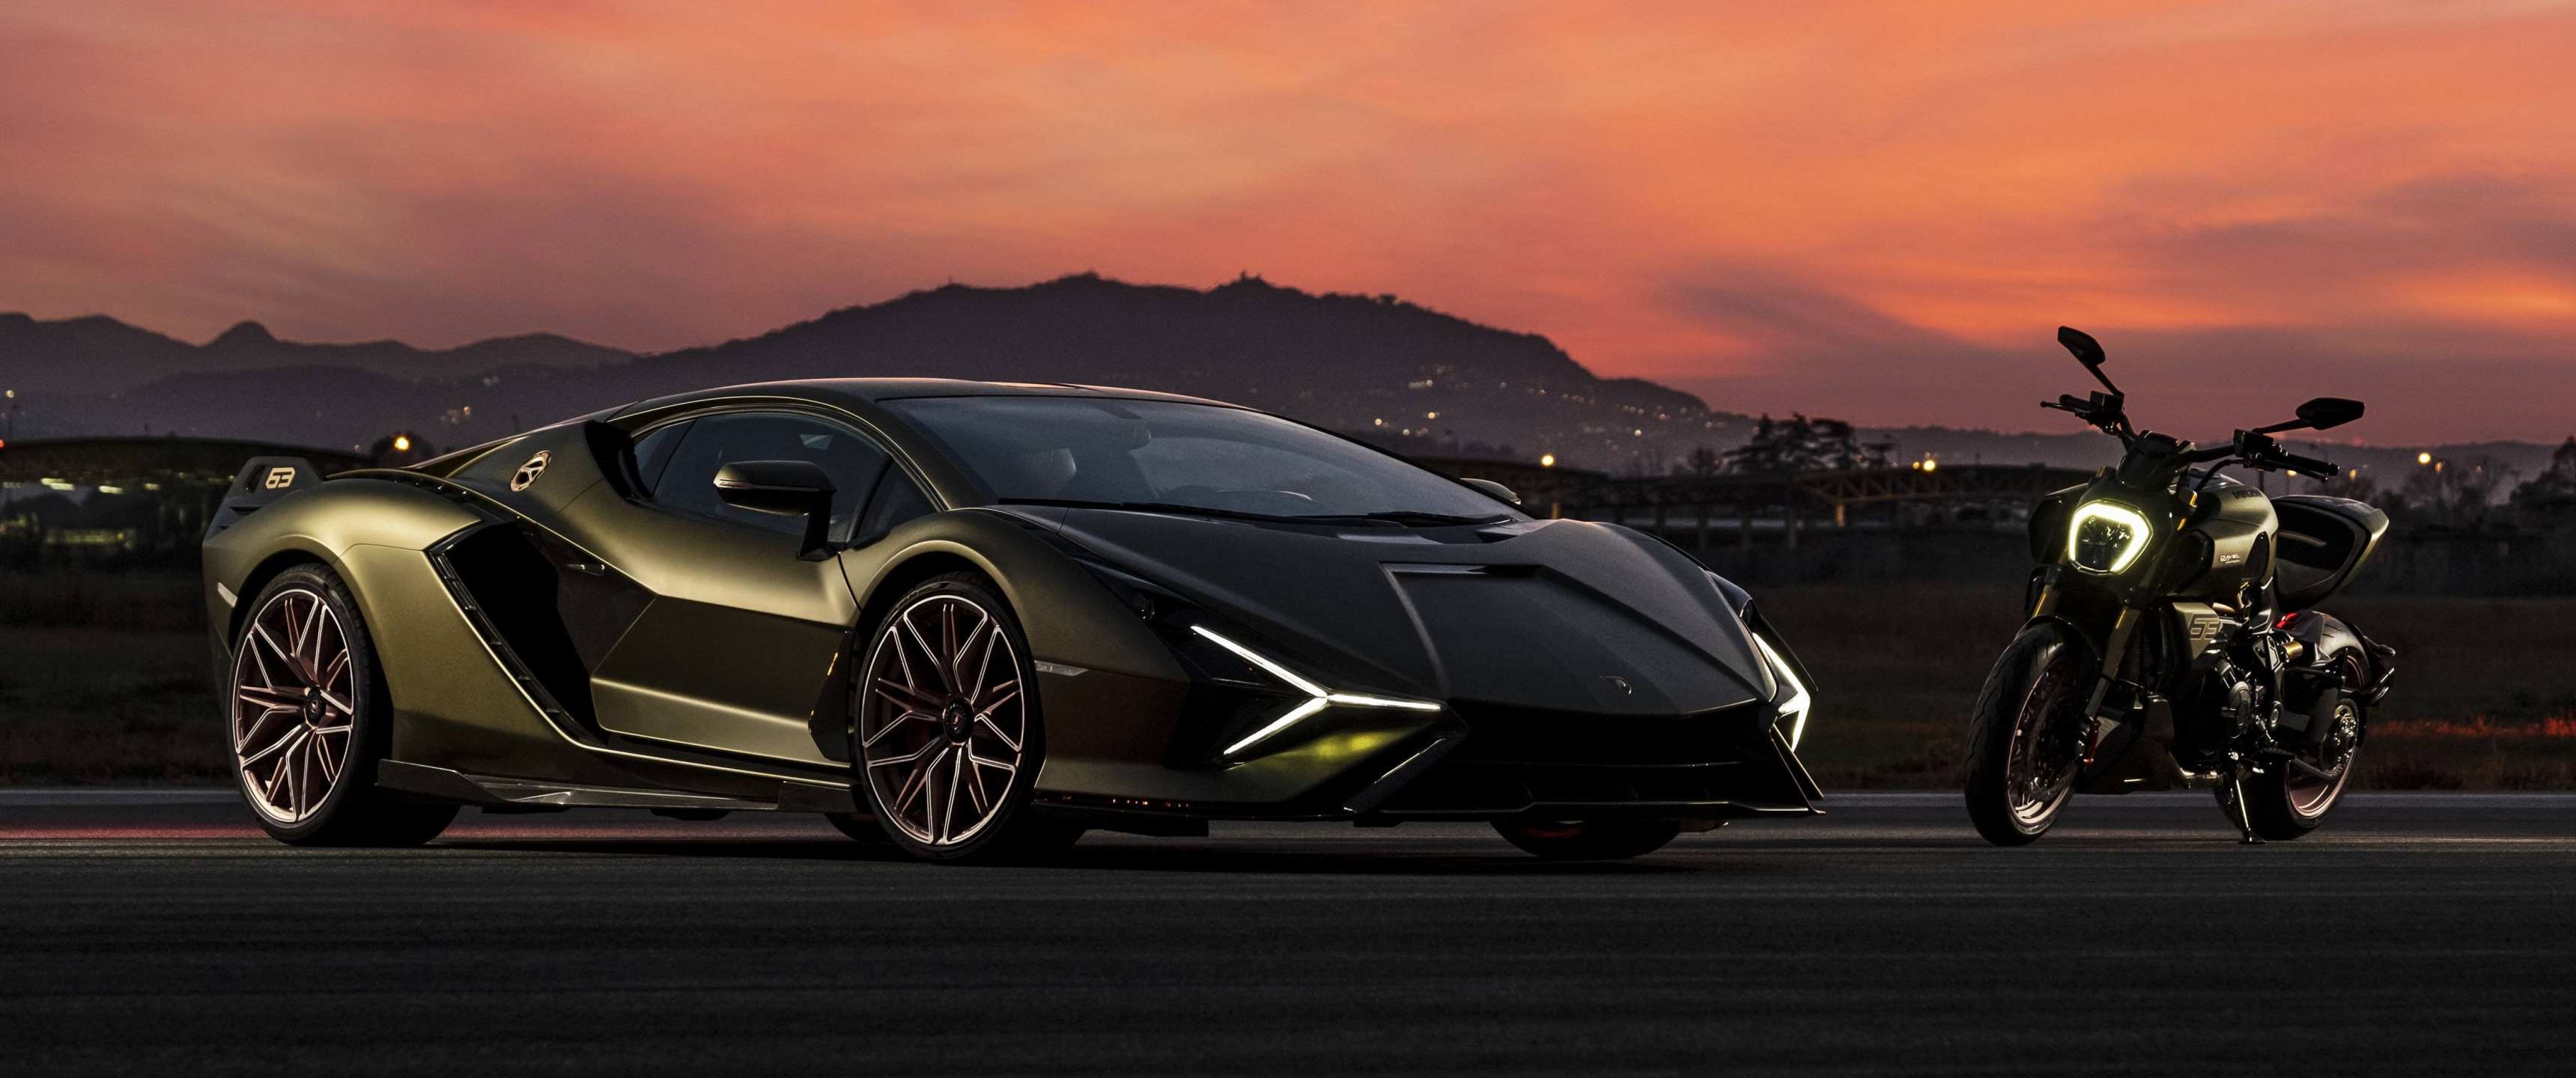 100 Lamborghini Huracán Evo HD Wallpapers and Backgrounds